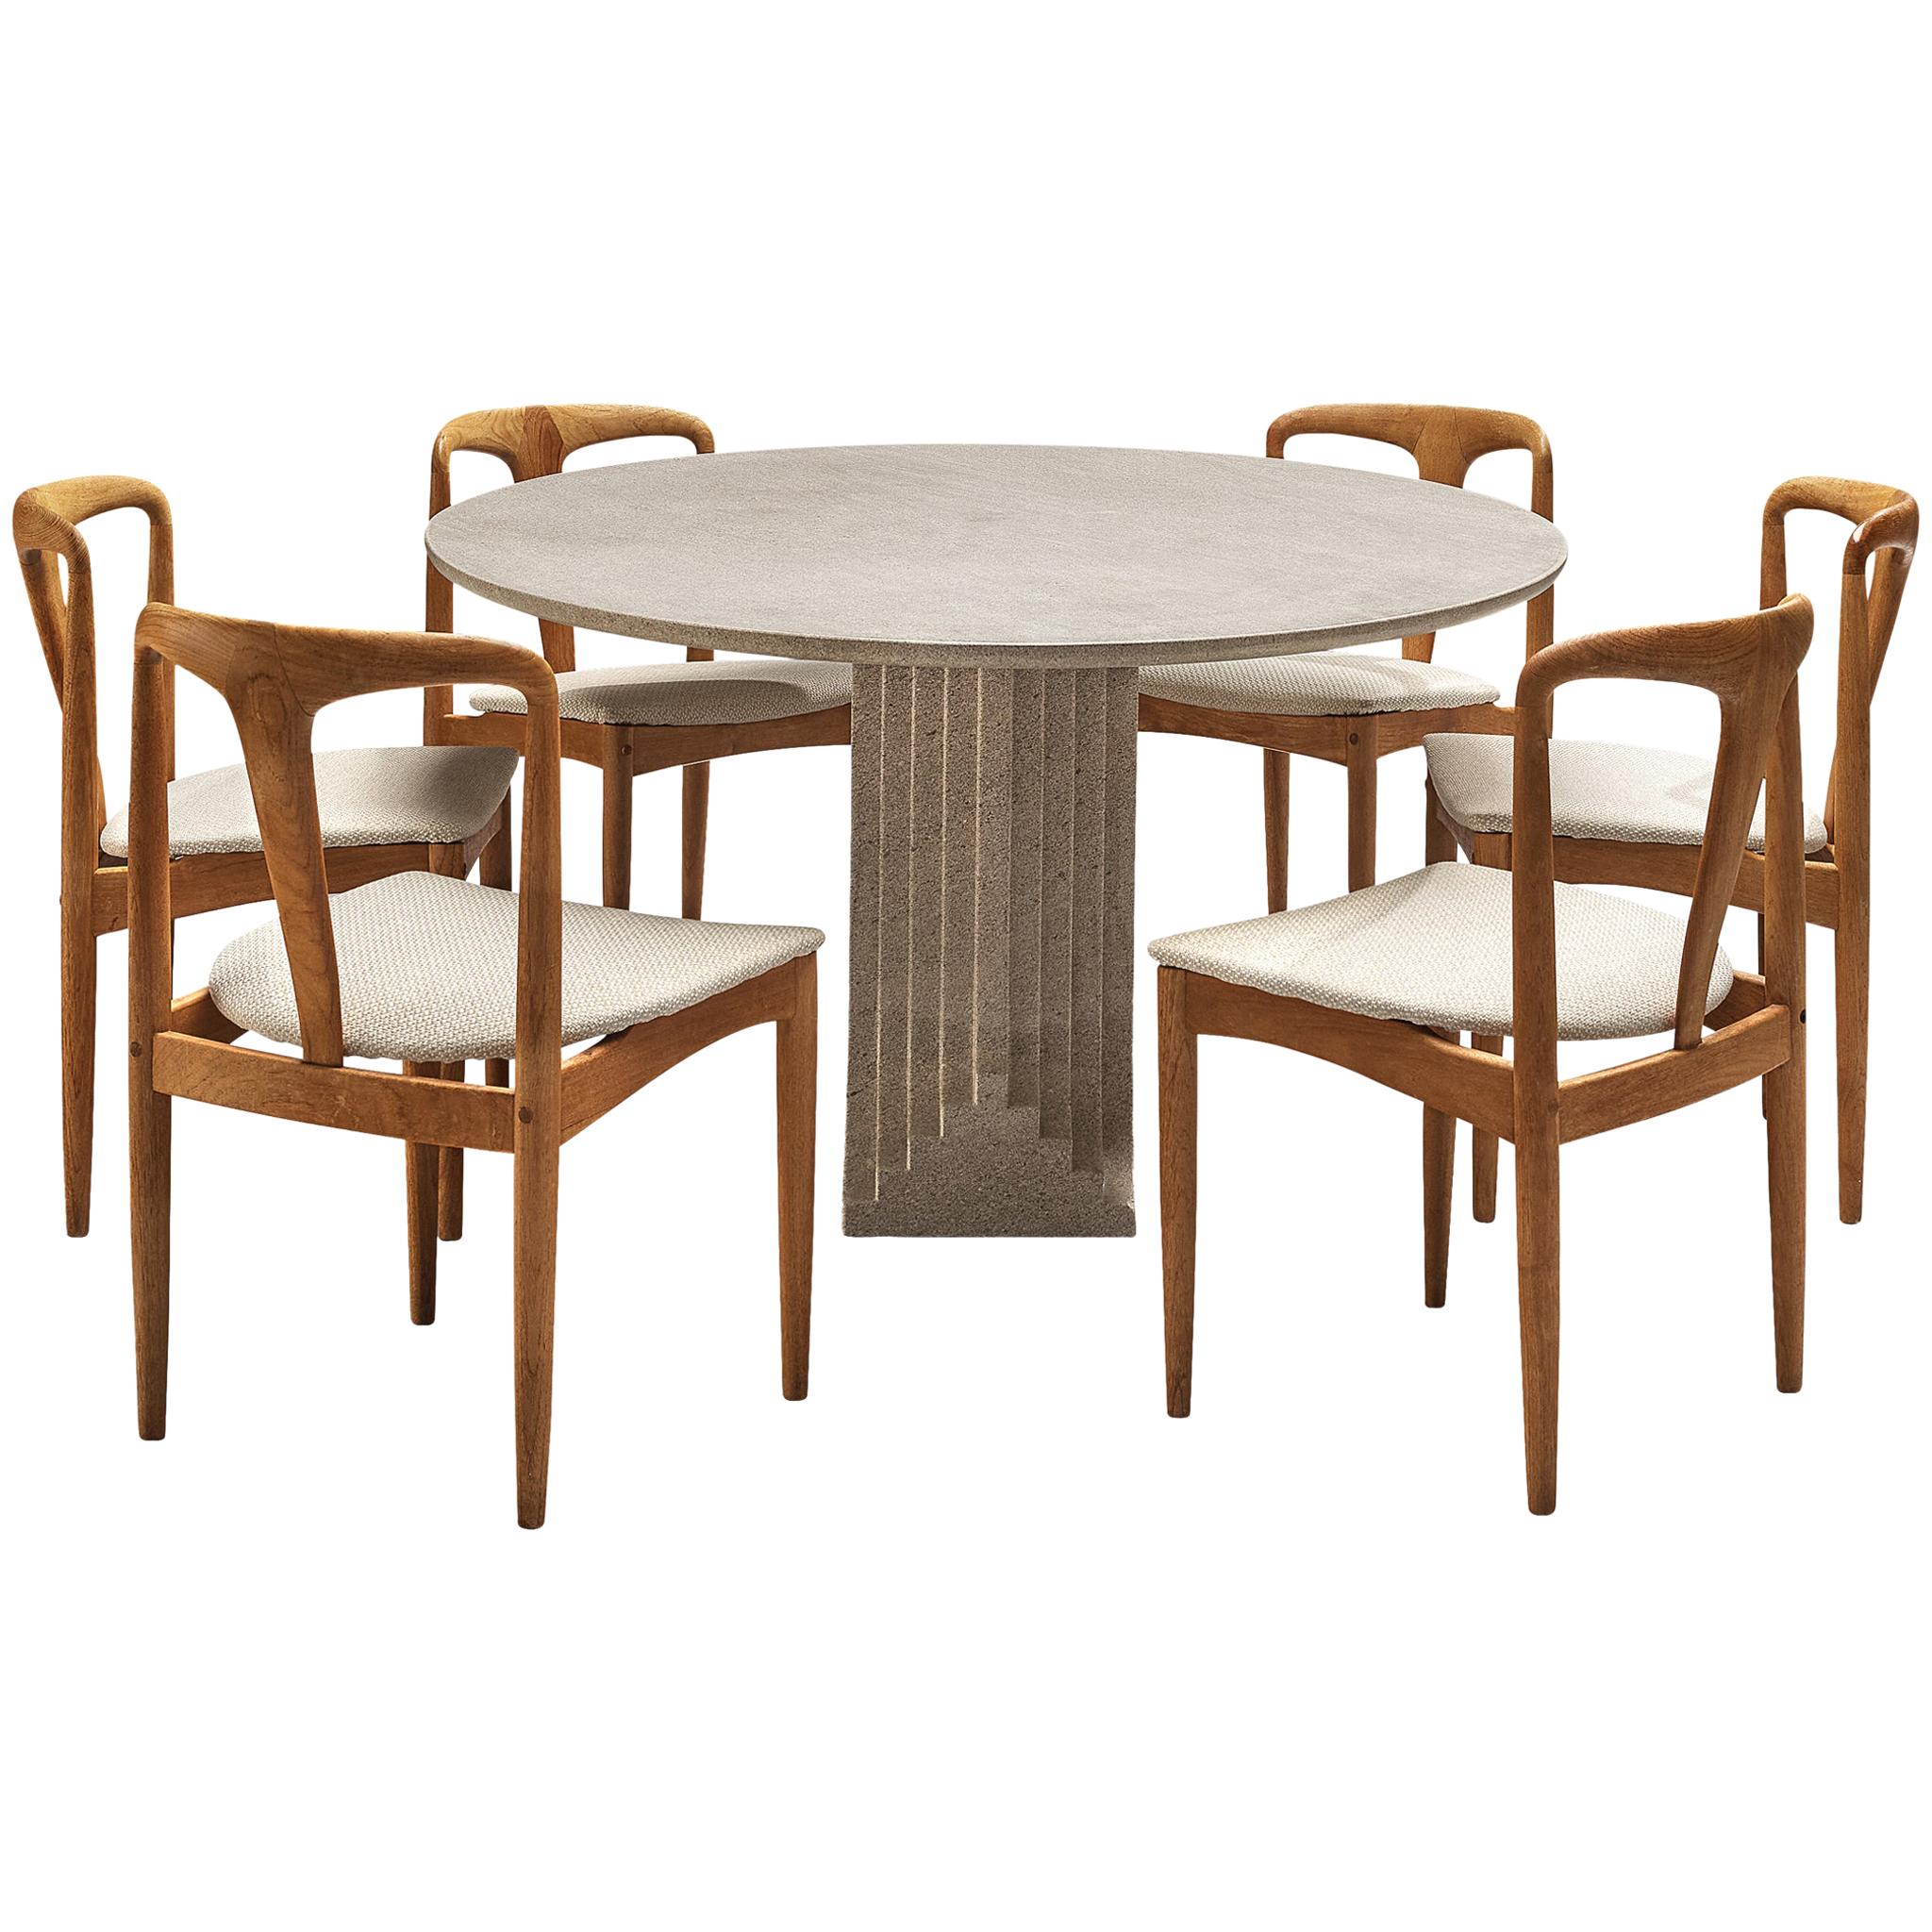 Carlo Scarpa ‘Samo’ Dining Table in Granit and J. Andersen ‘Juliane’ Chairs